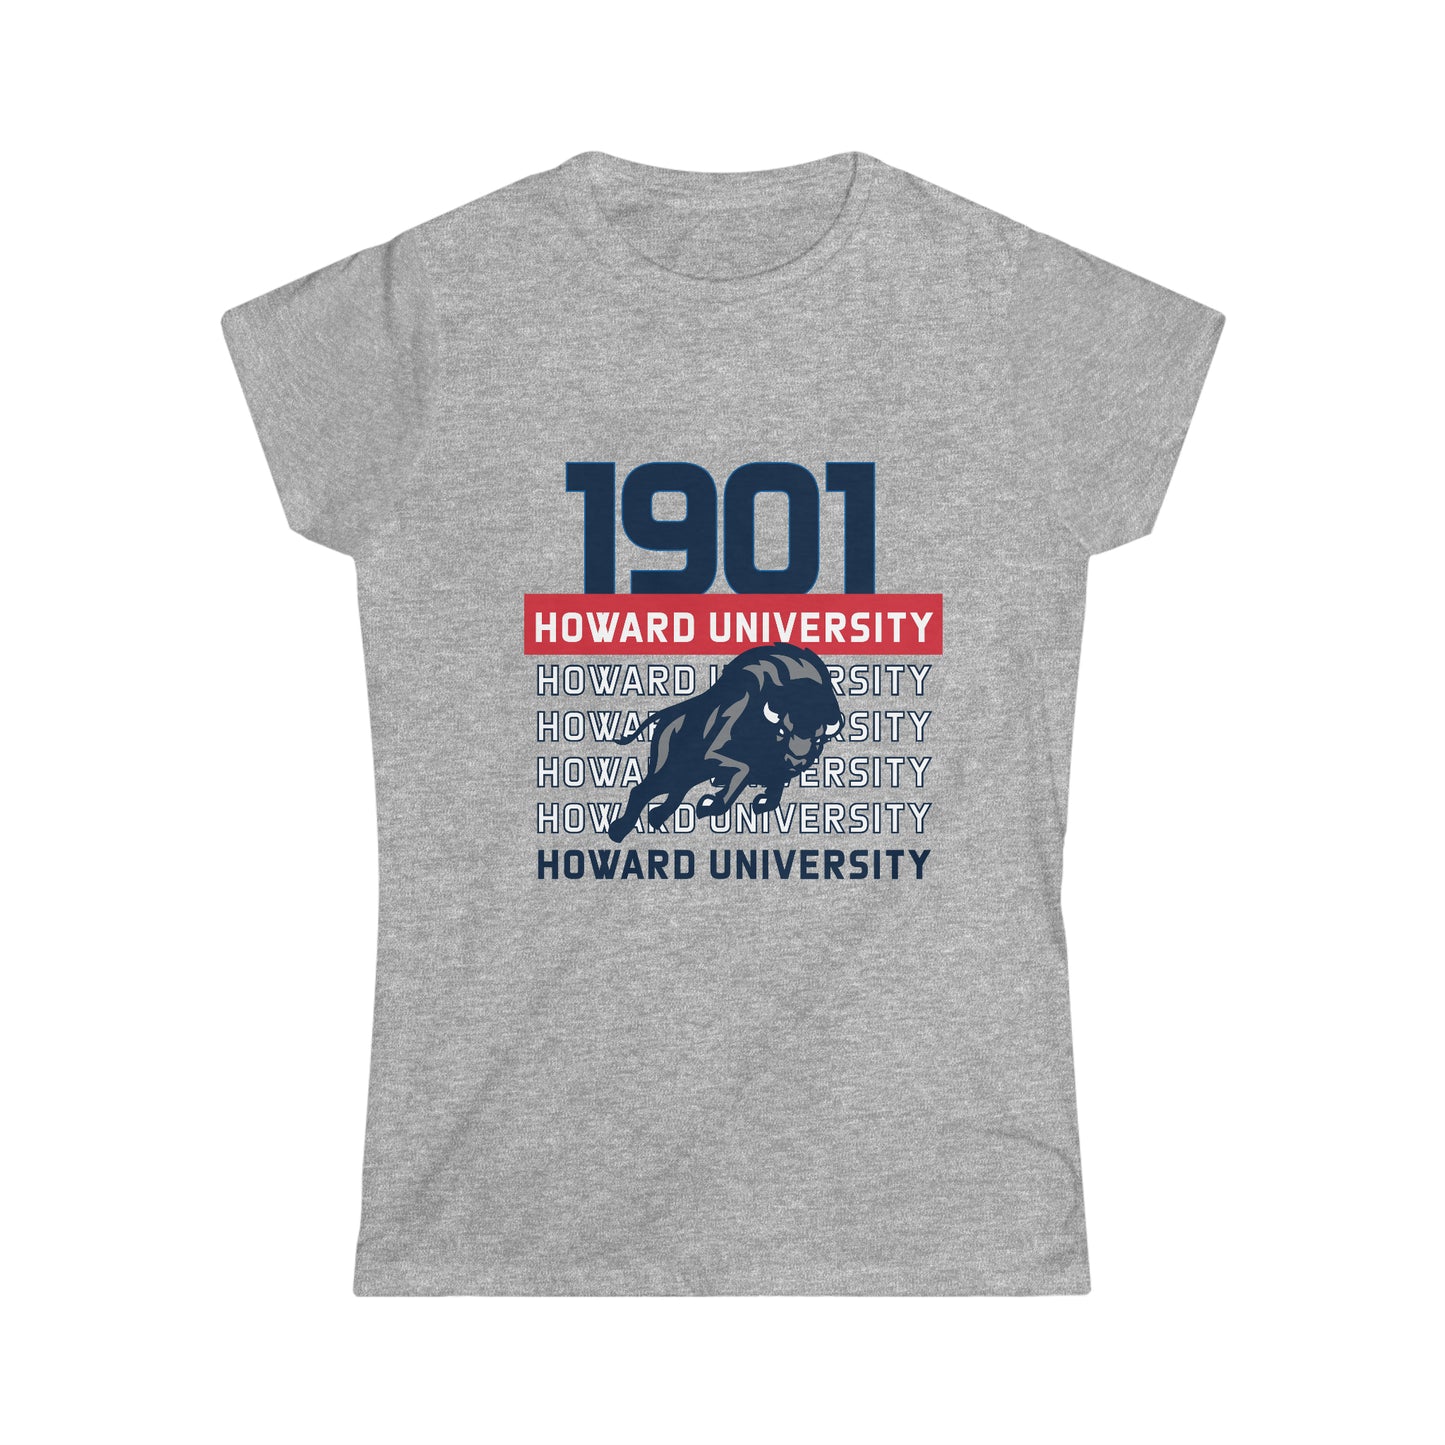 HBCU Love (Howard University 1901/ Women's Softstyle Tee)